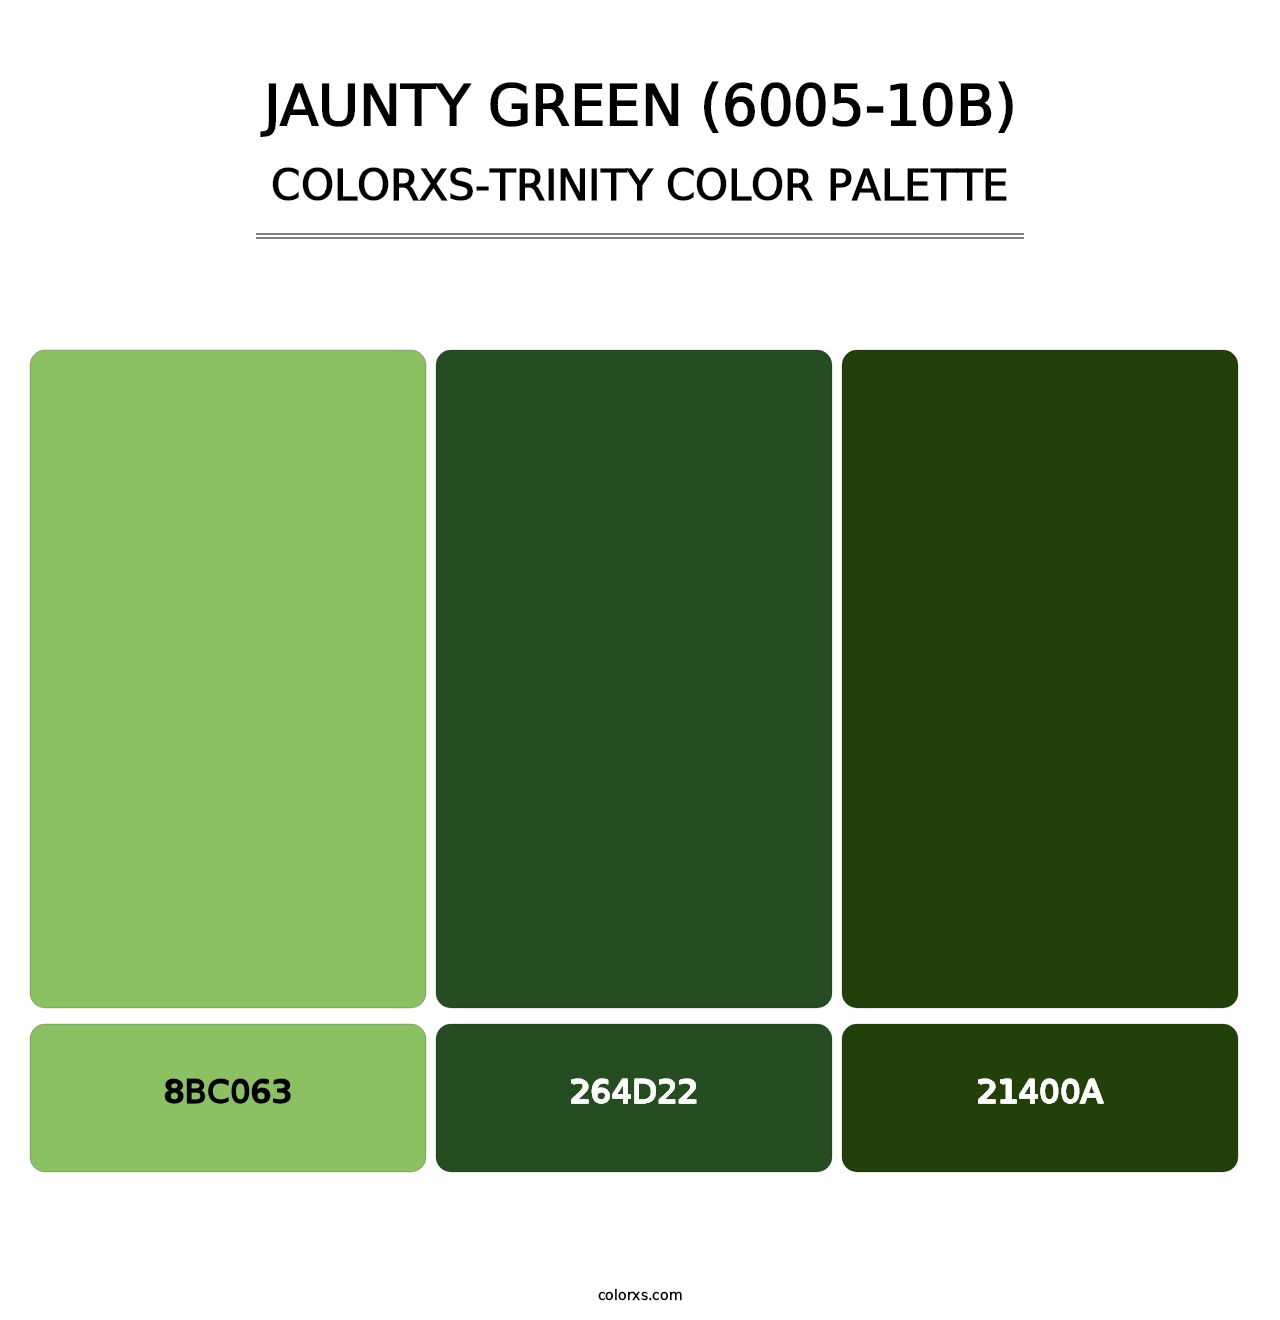 Jaunty Green (6005-10B) - Colorxs Trinity Palette